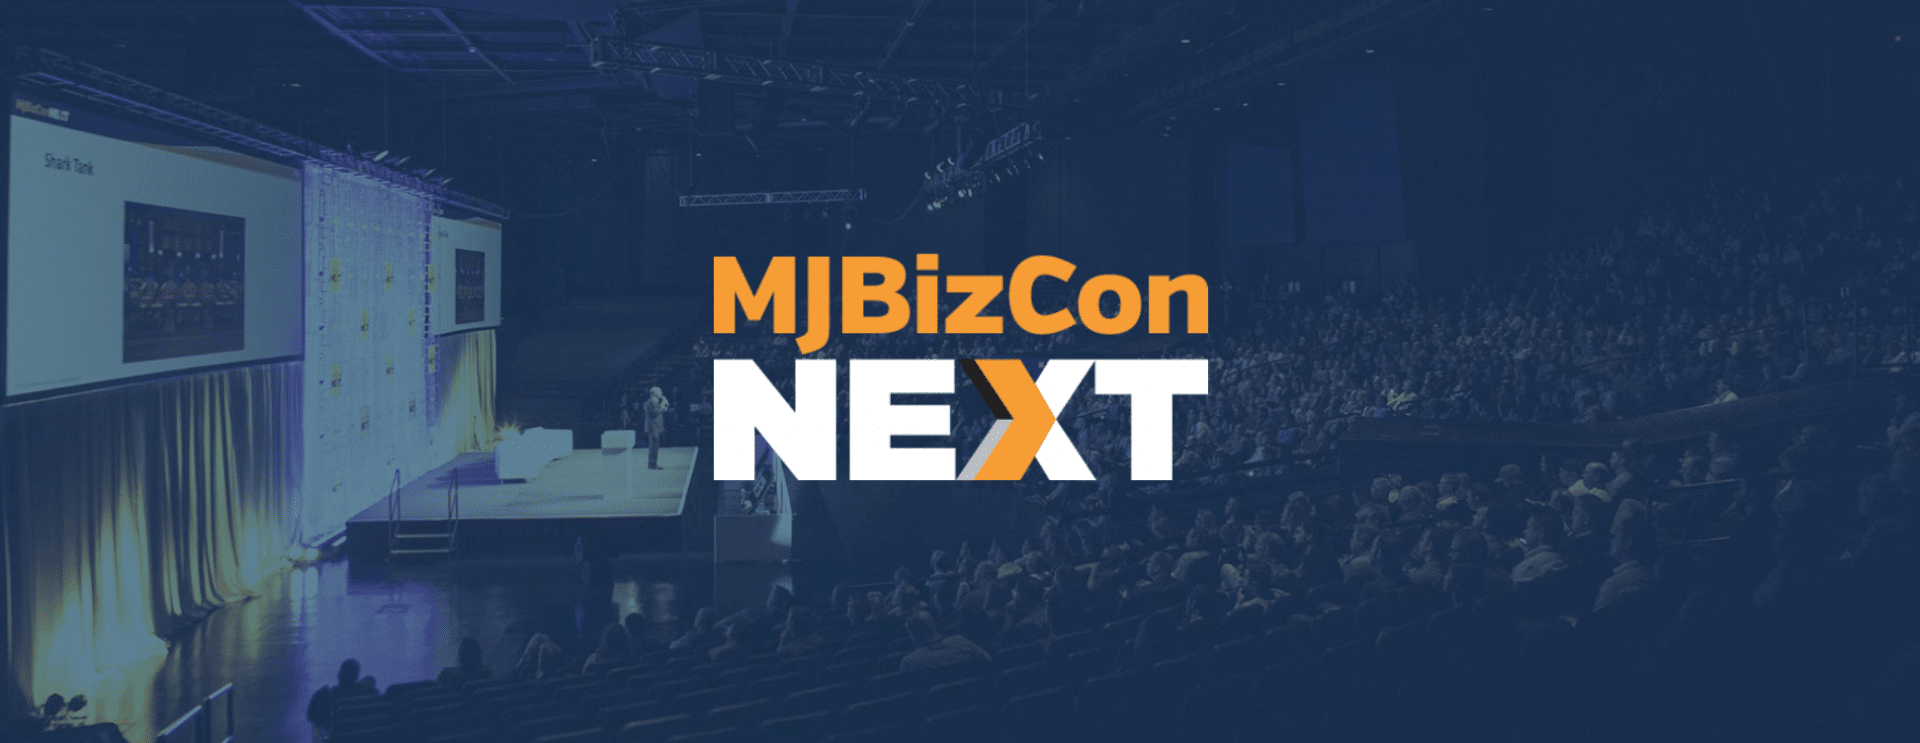 Key Takeaways from the MJBizCon Next Conference